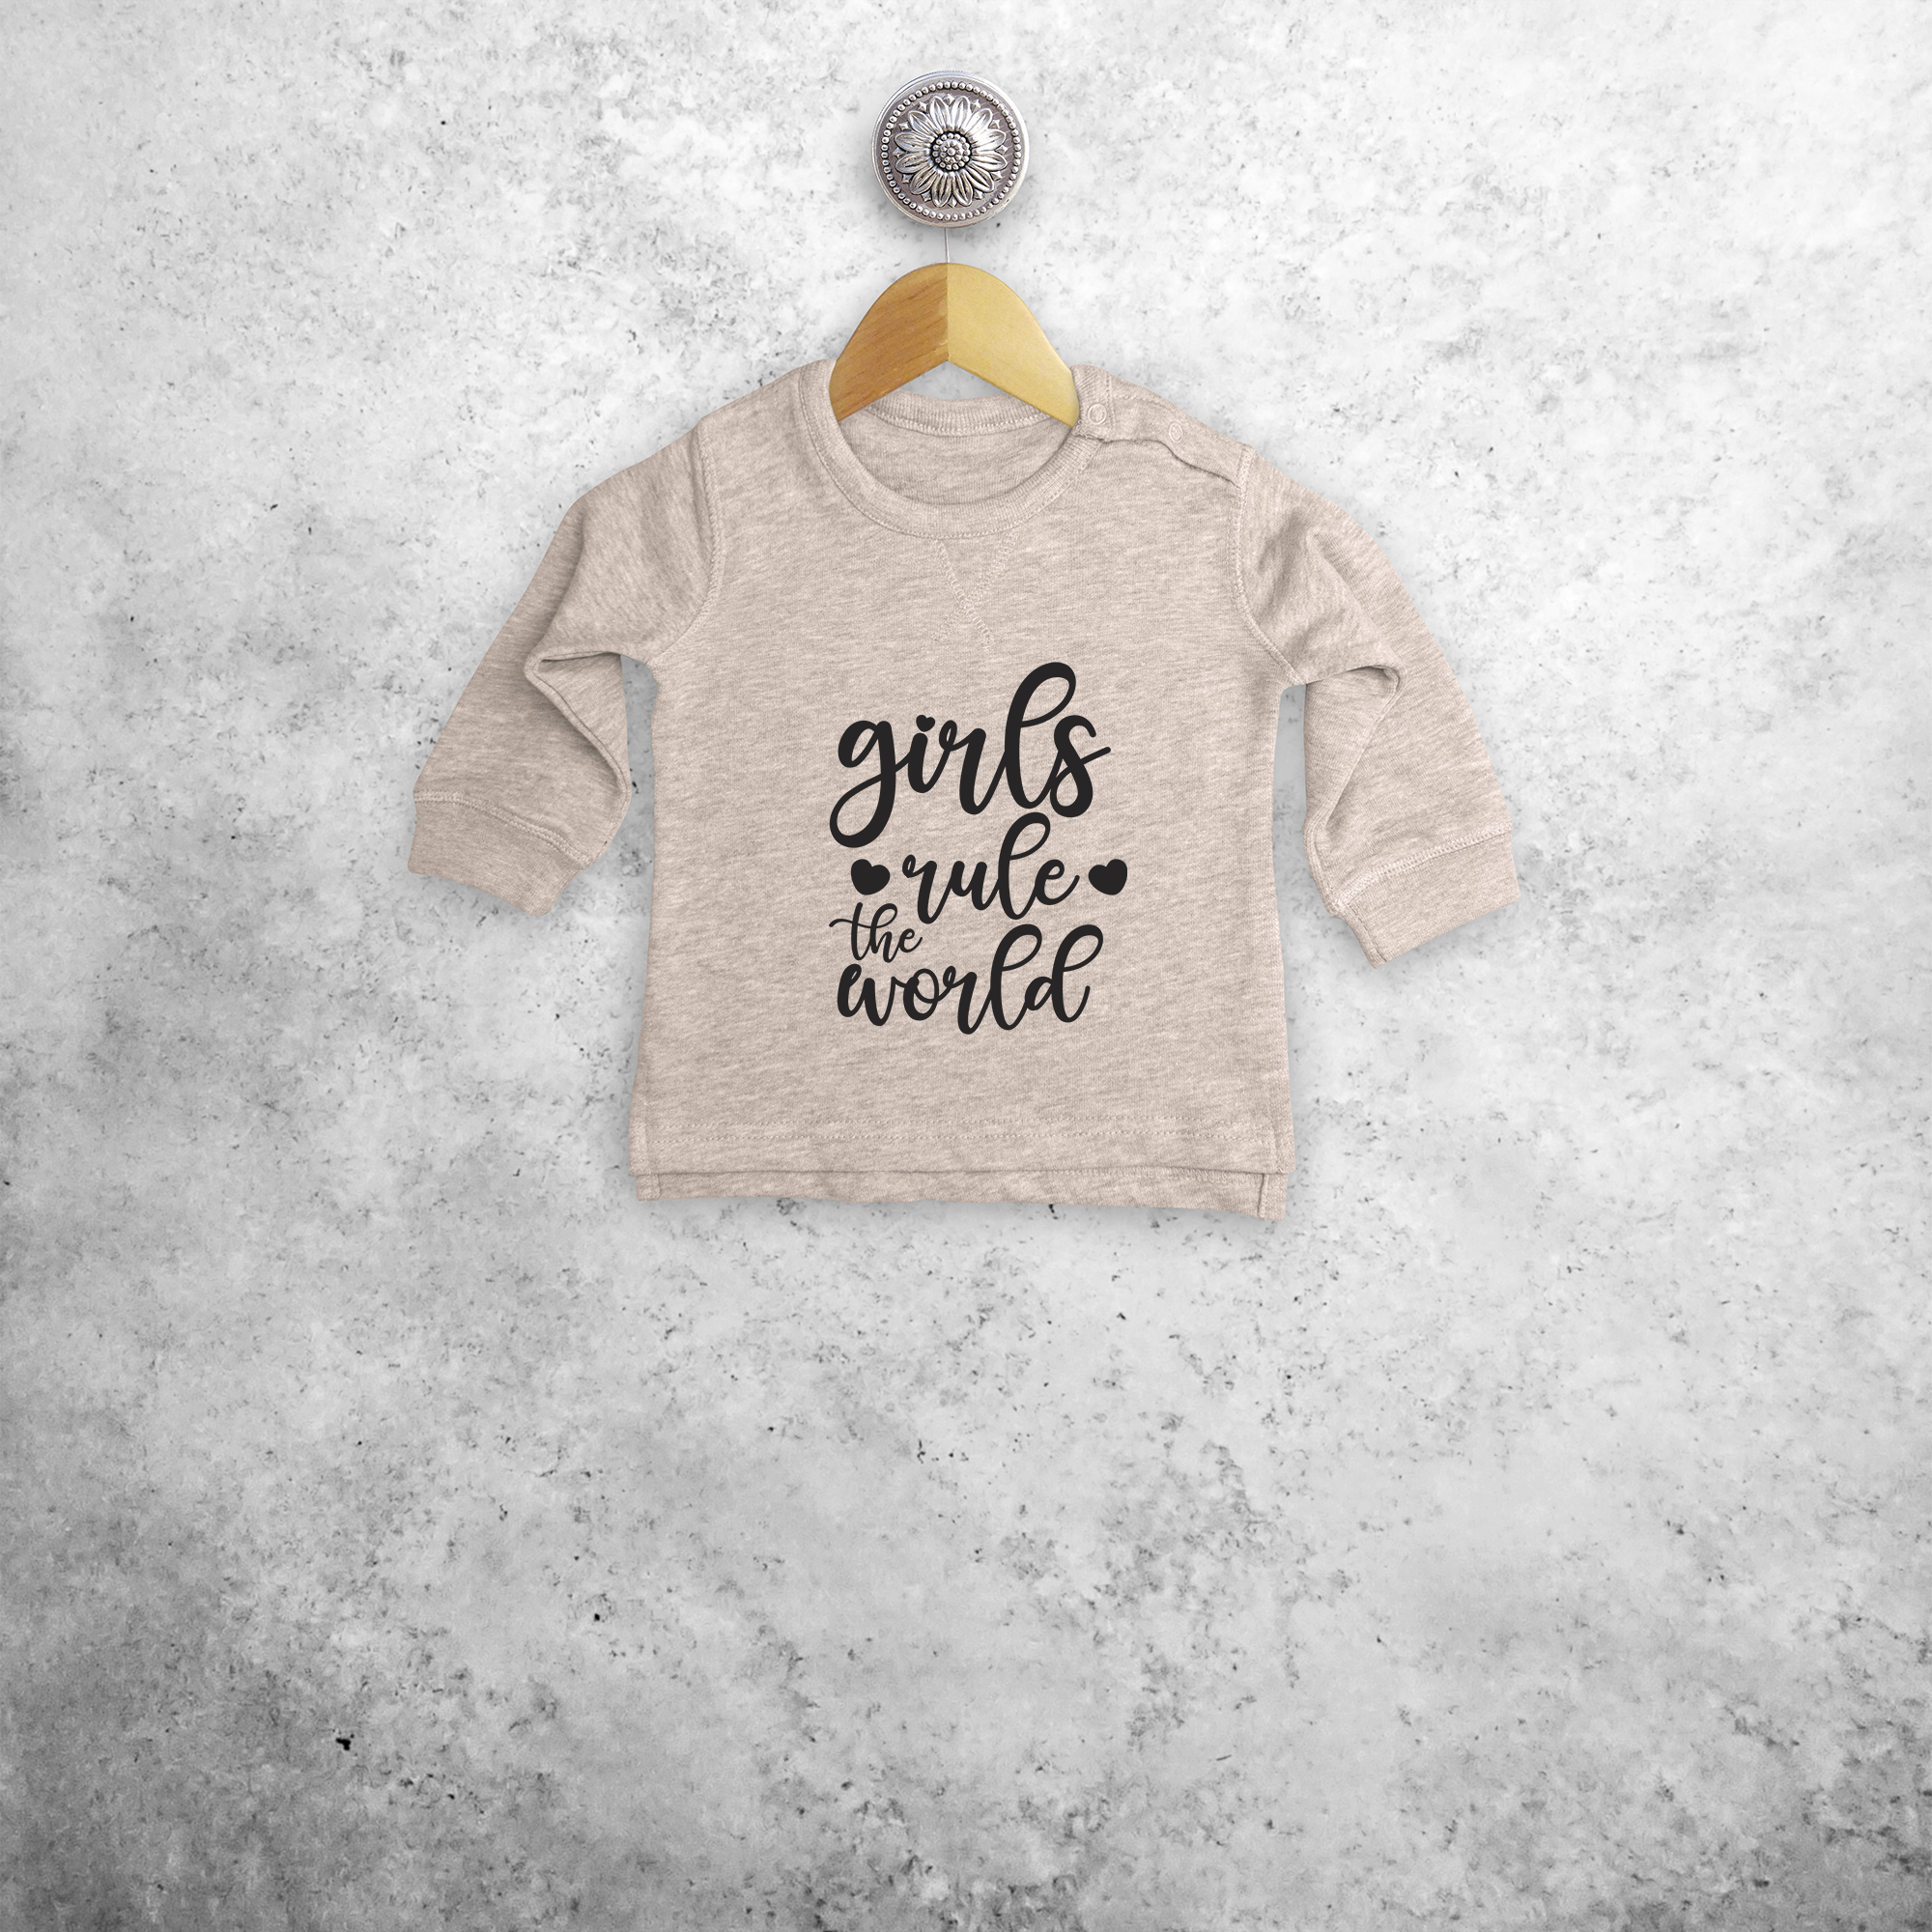 'Girls rule the world' baby trui